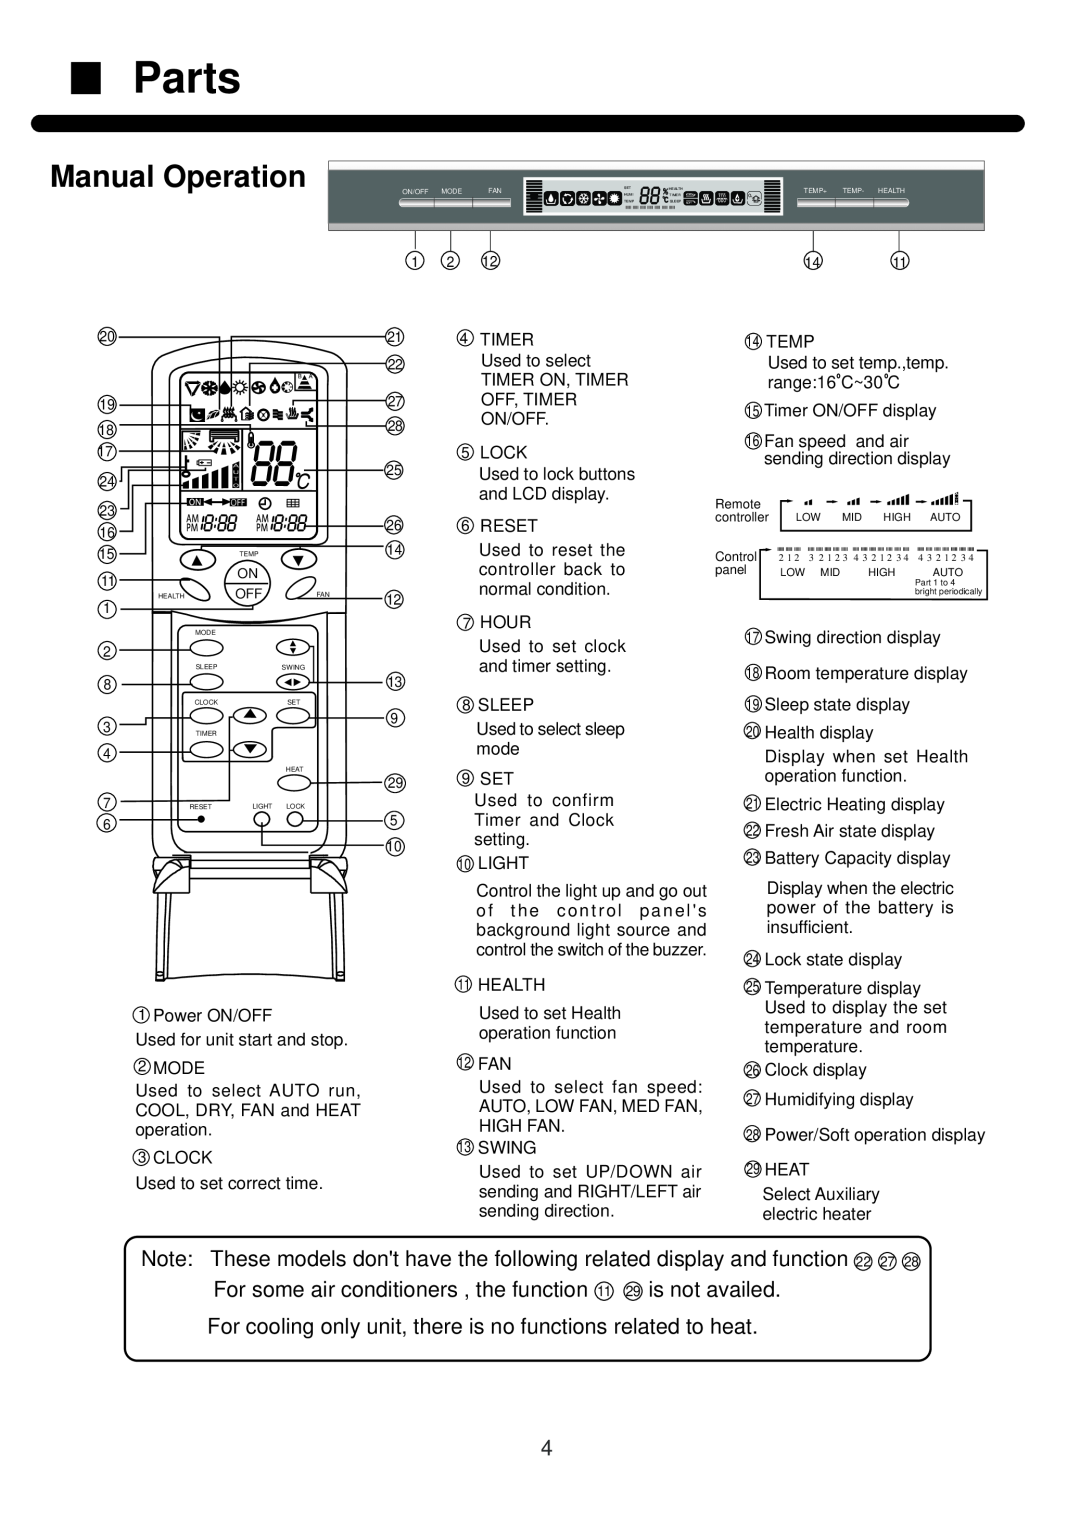 Haier AP602AKEAA, AP482AKEAA installation manual Manual Operation, Parts 